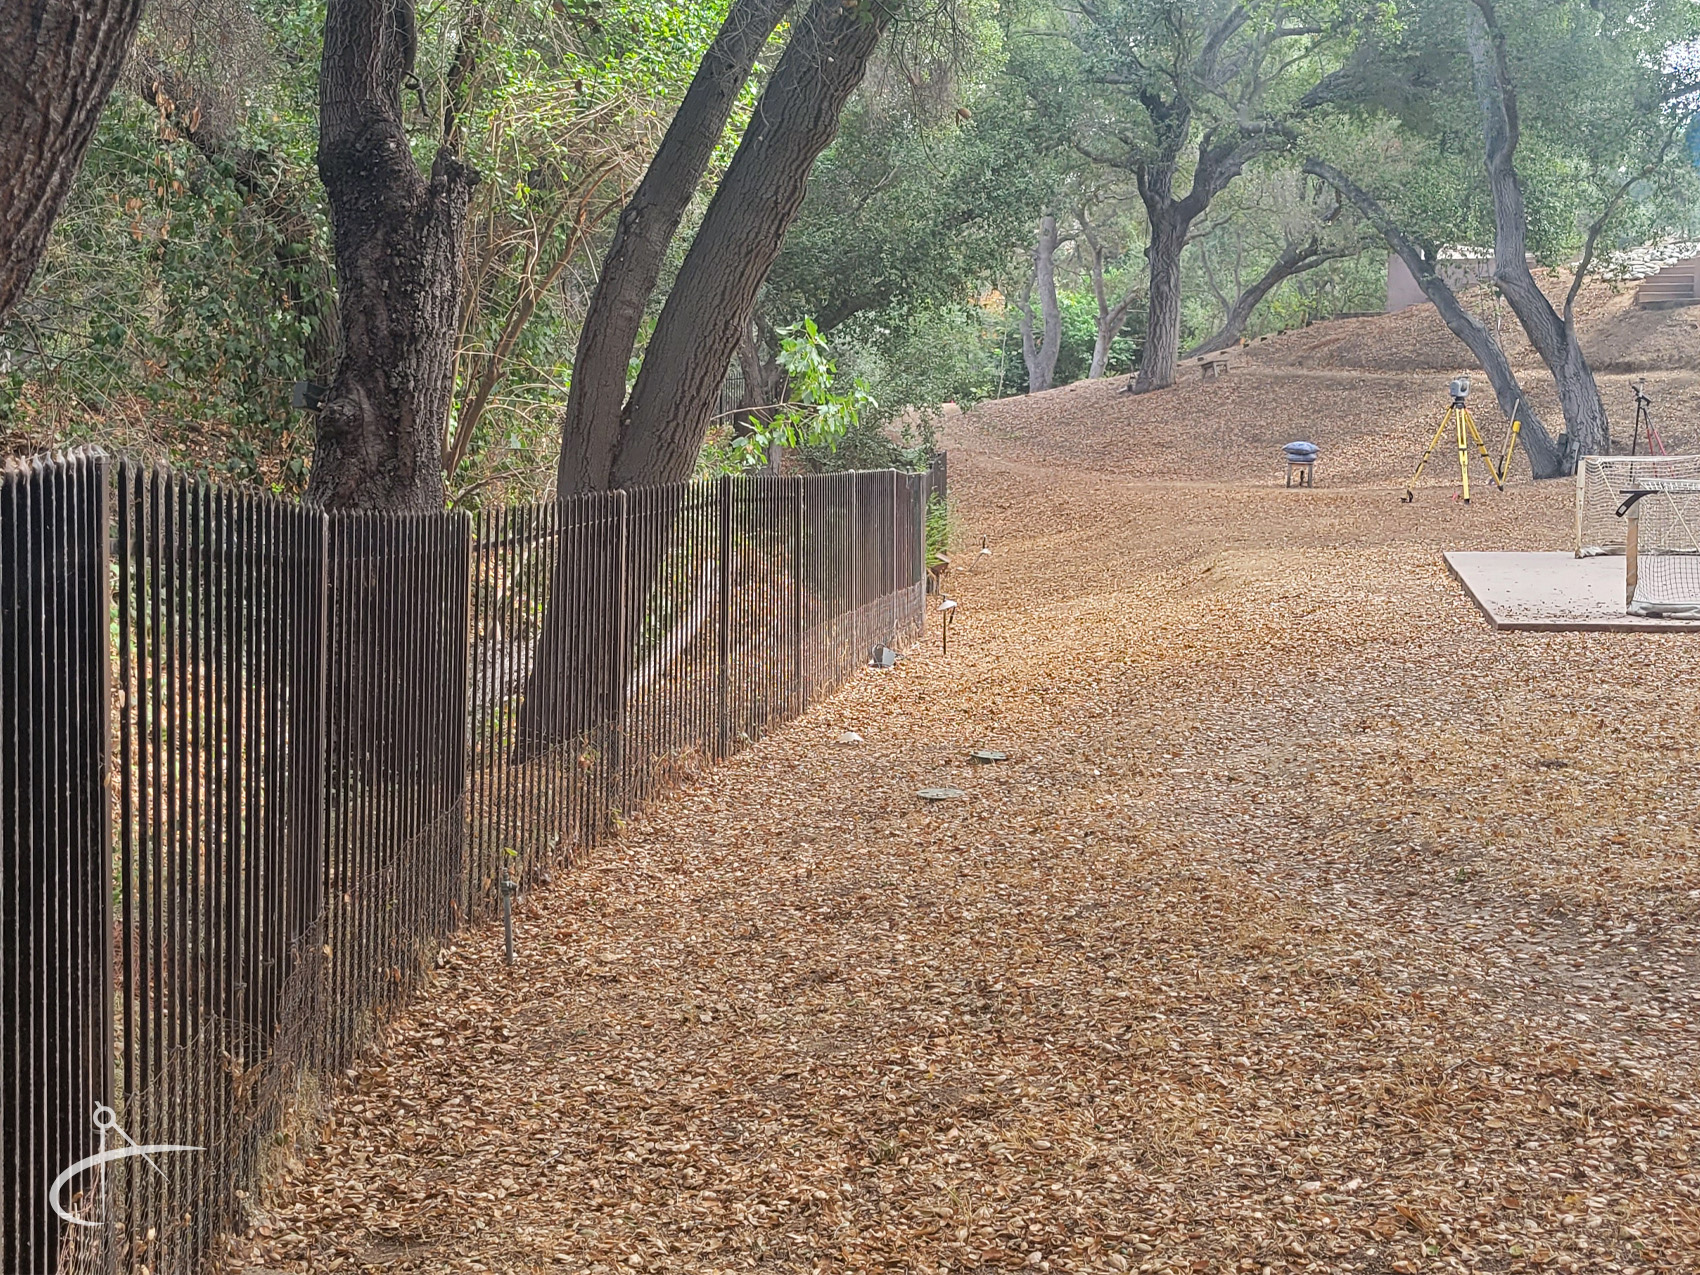 Oak trees along a fence line.